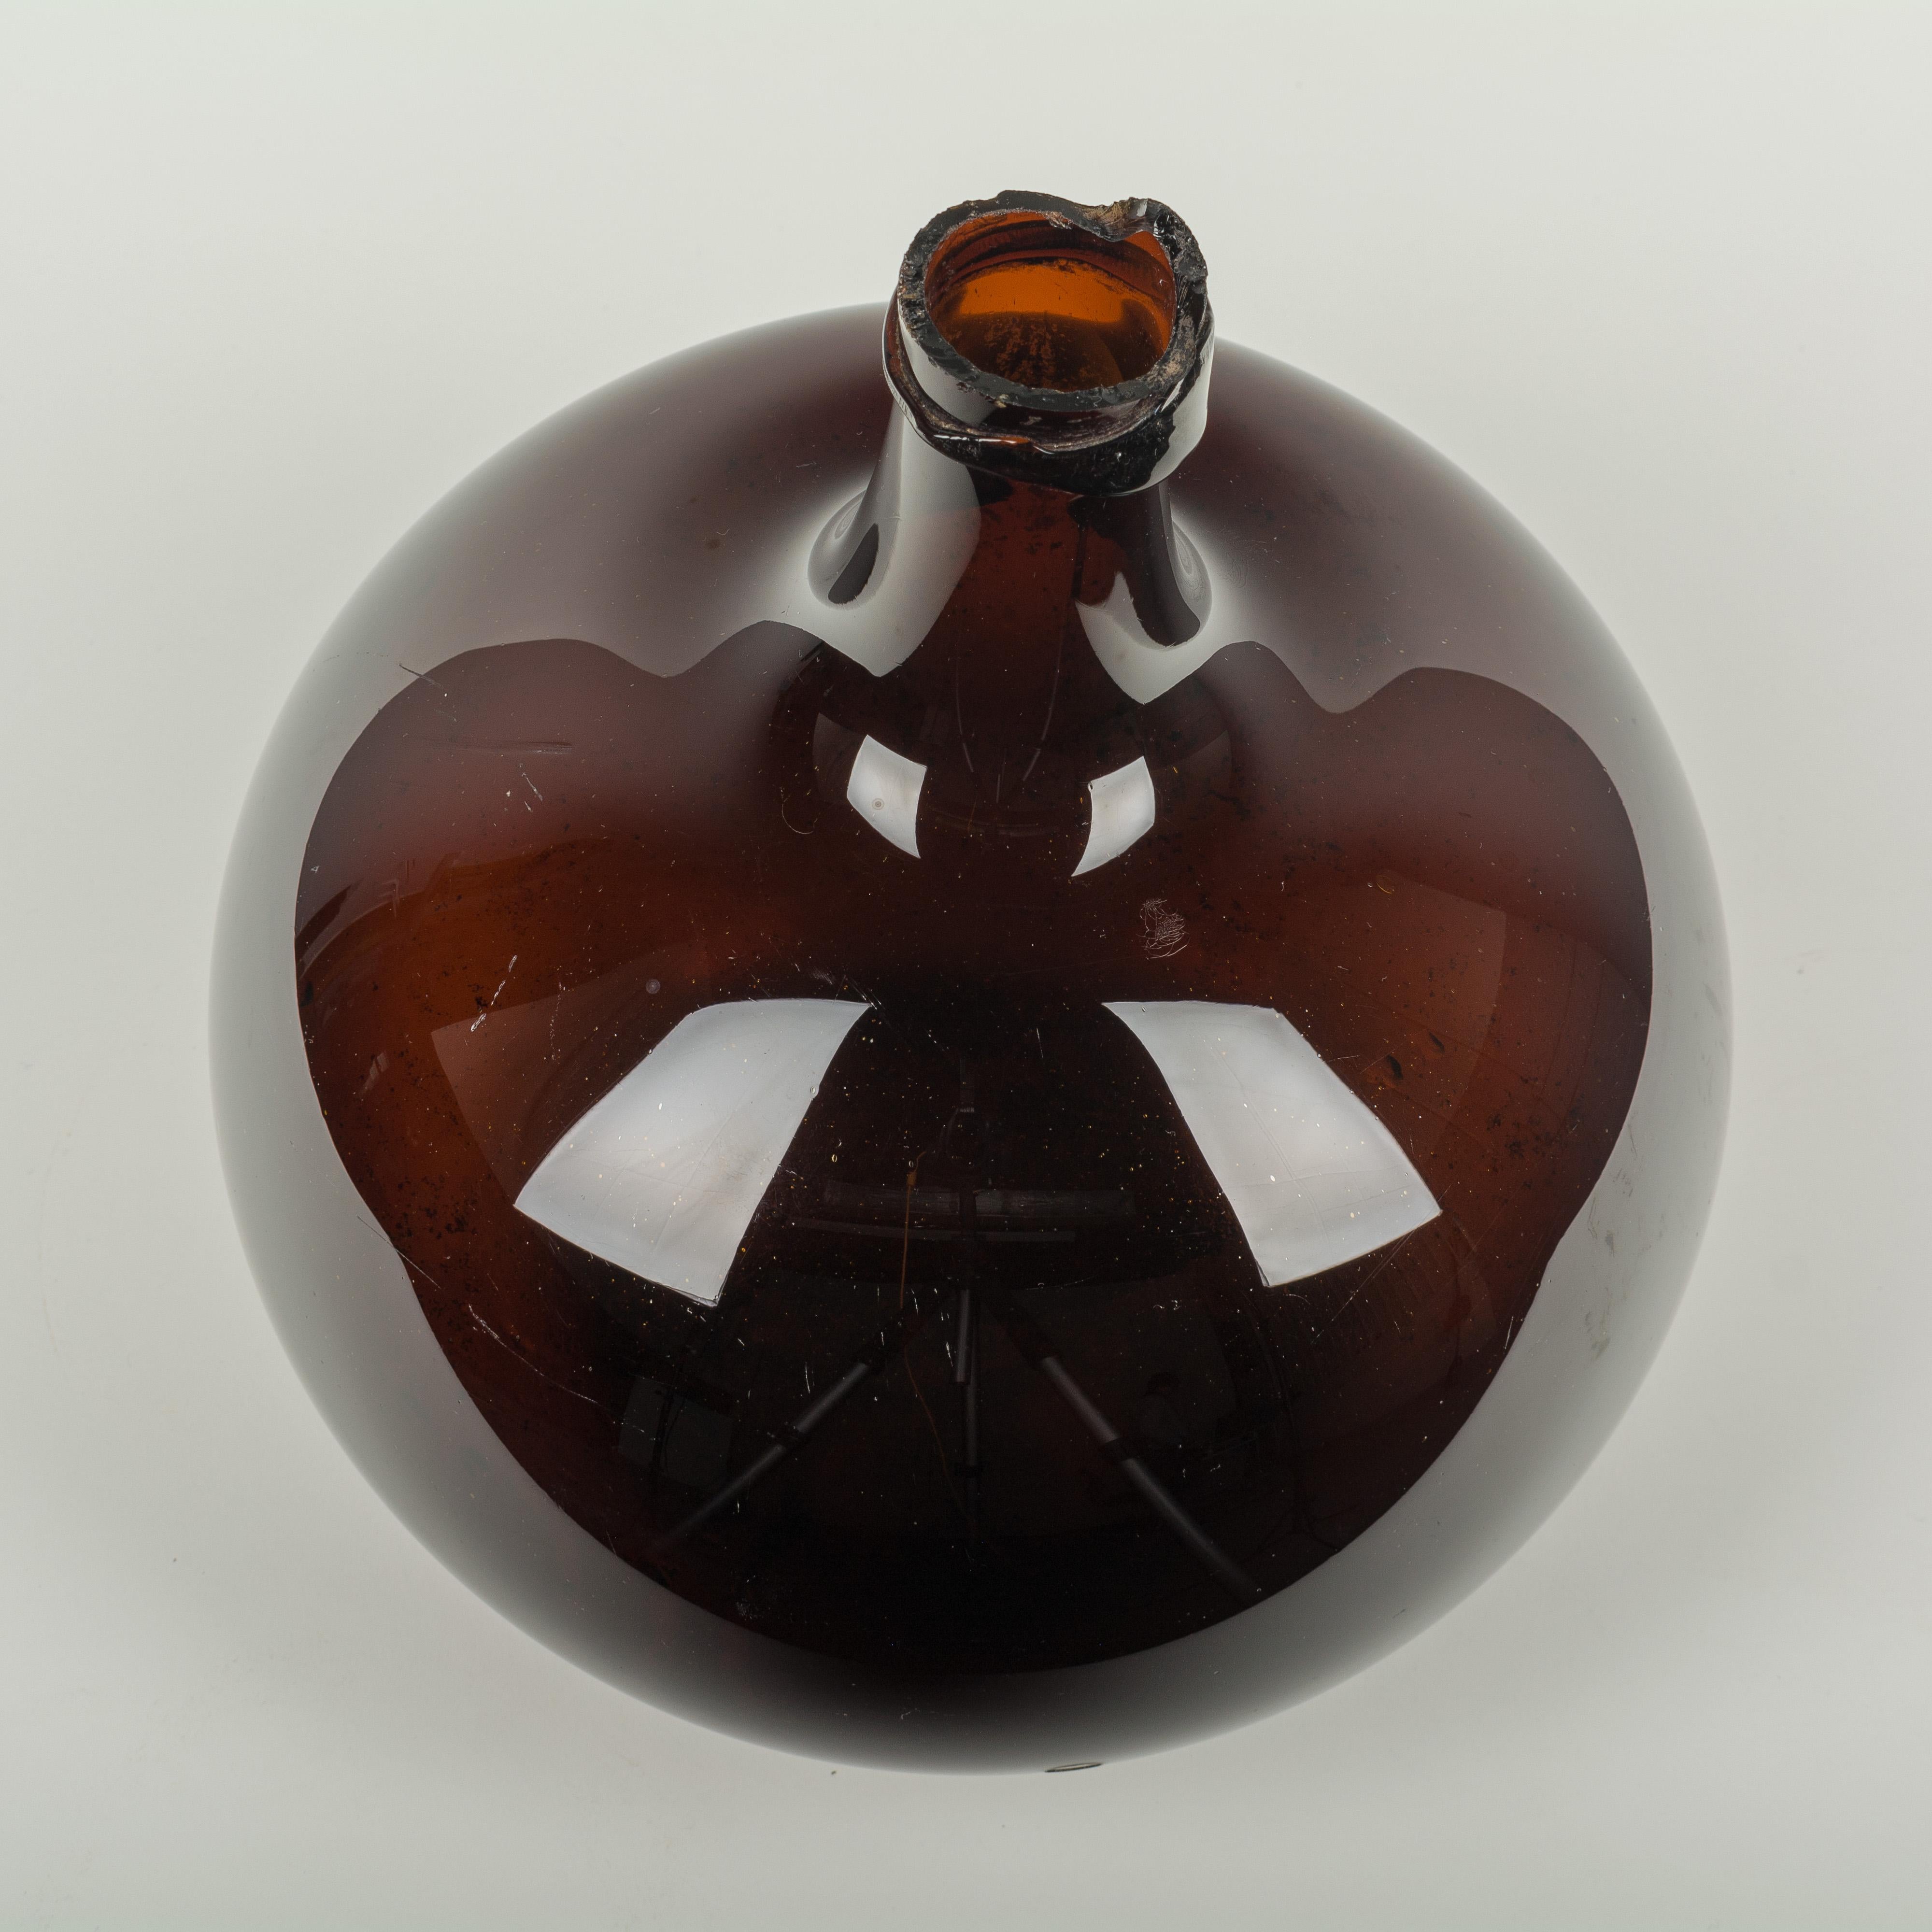 19th Century French Blown Glass Demijohn Bottle 3